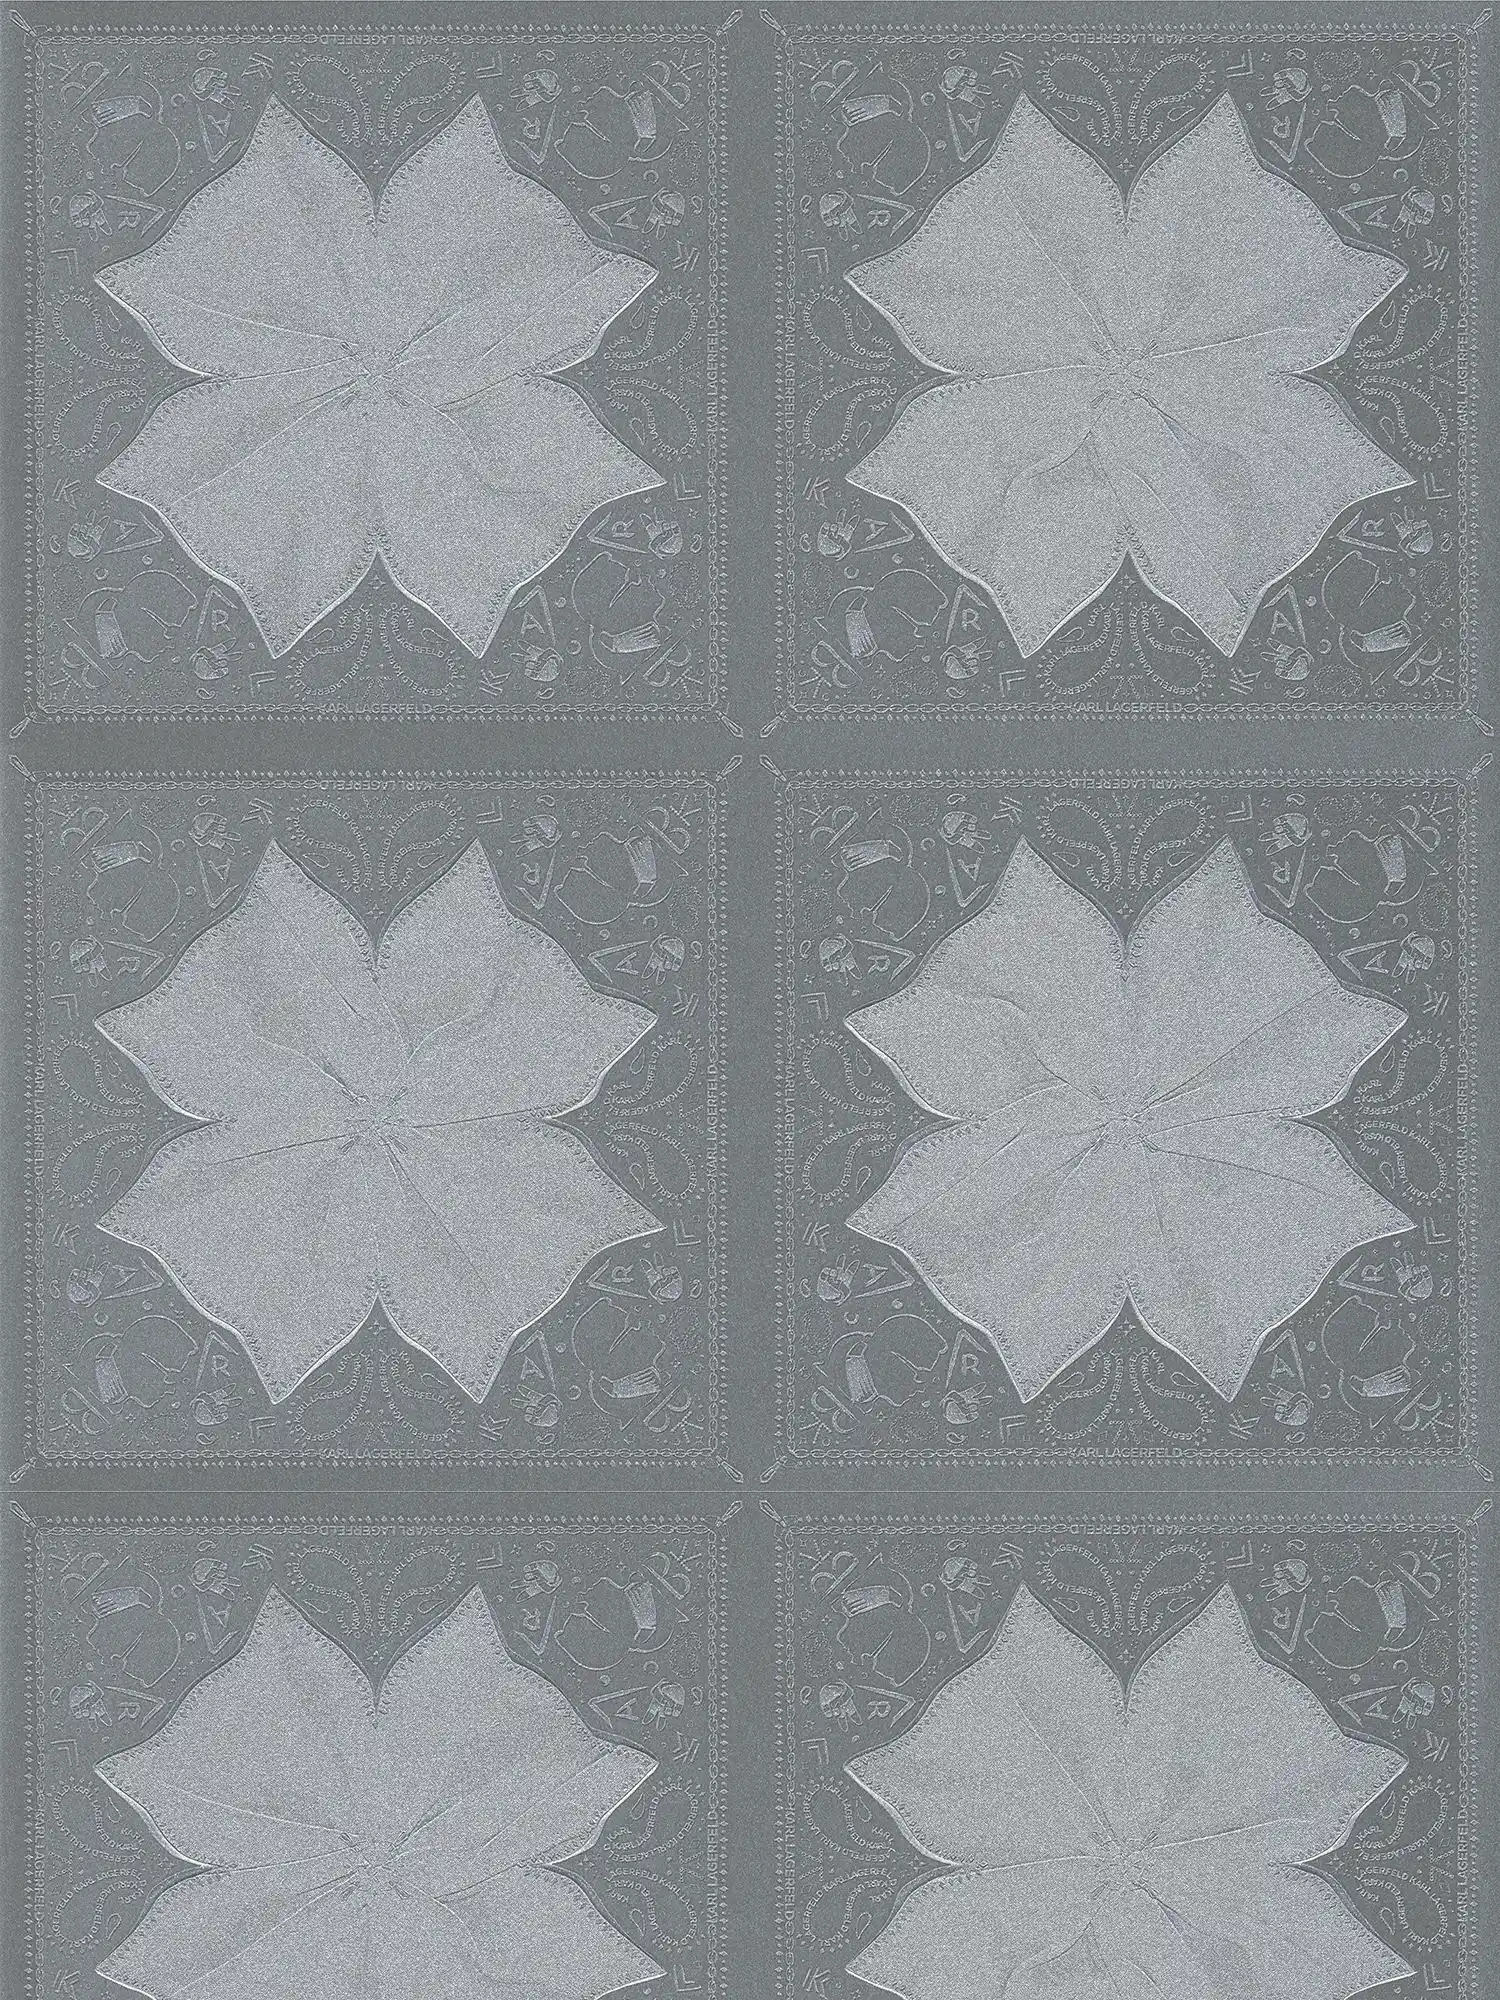 Karl LAGERFELD Tie Pattern Behang - Grijs, Metallic
